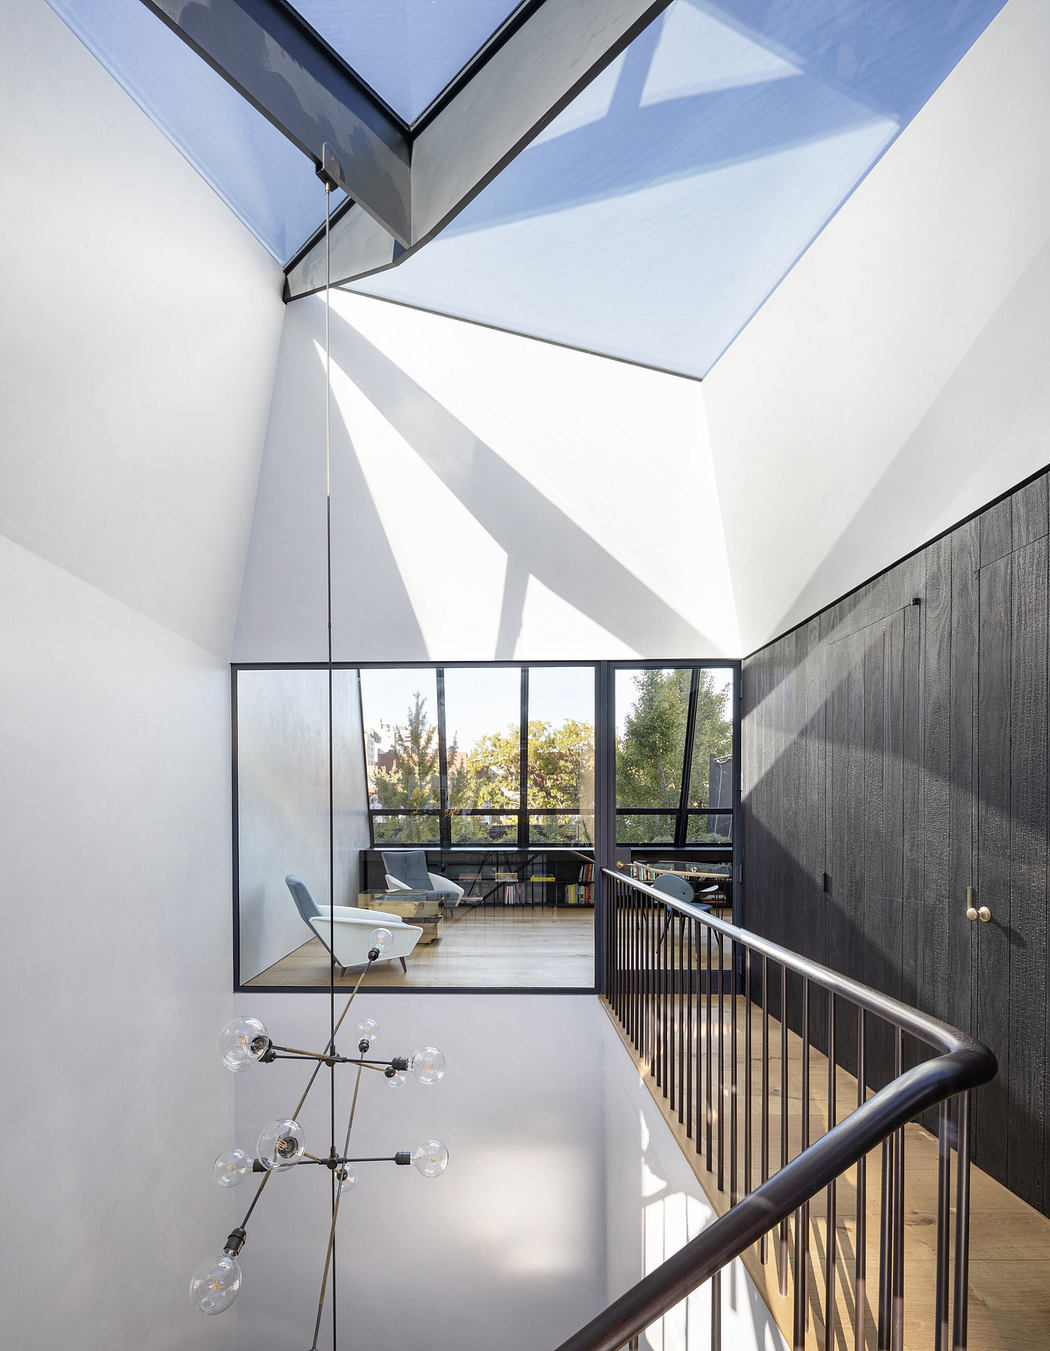 Modern stairwell with geometric skylight and minimalist design.